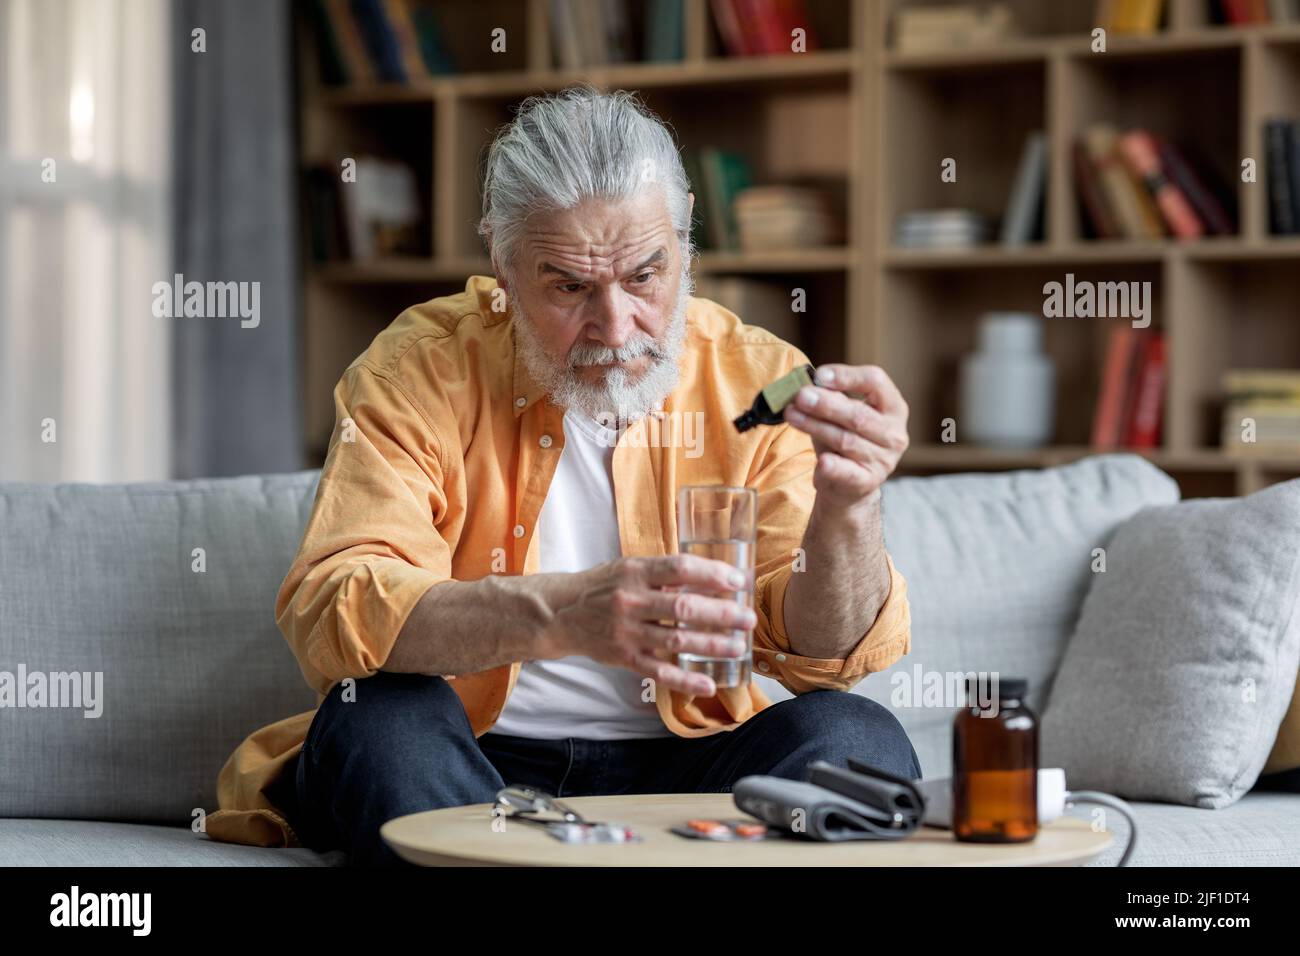 Sick elderly man suffering from hypertension, using medicine Stock Photo